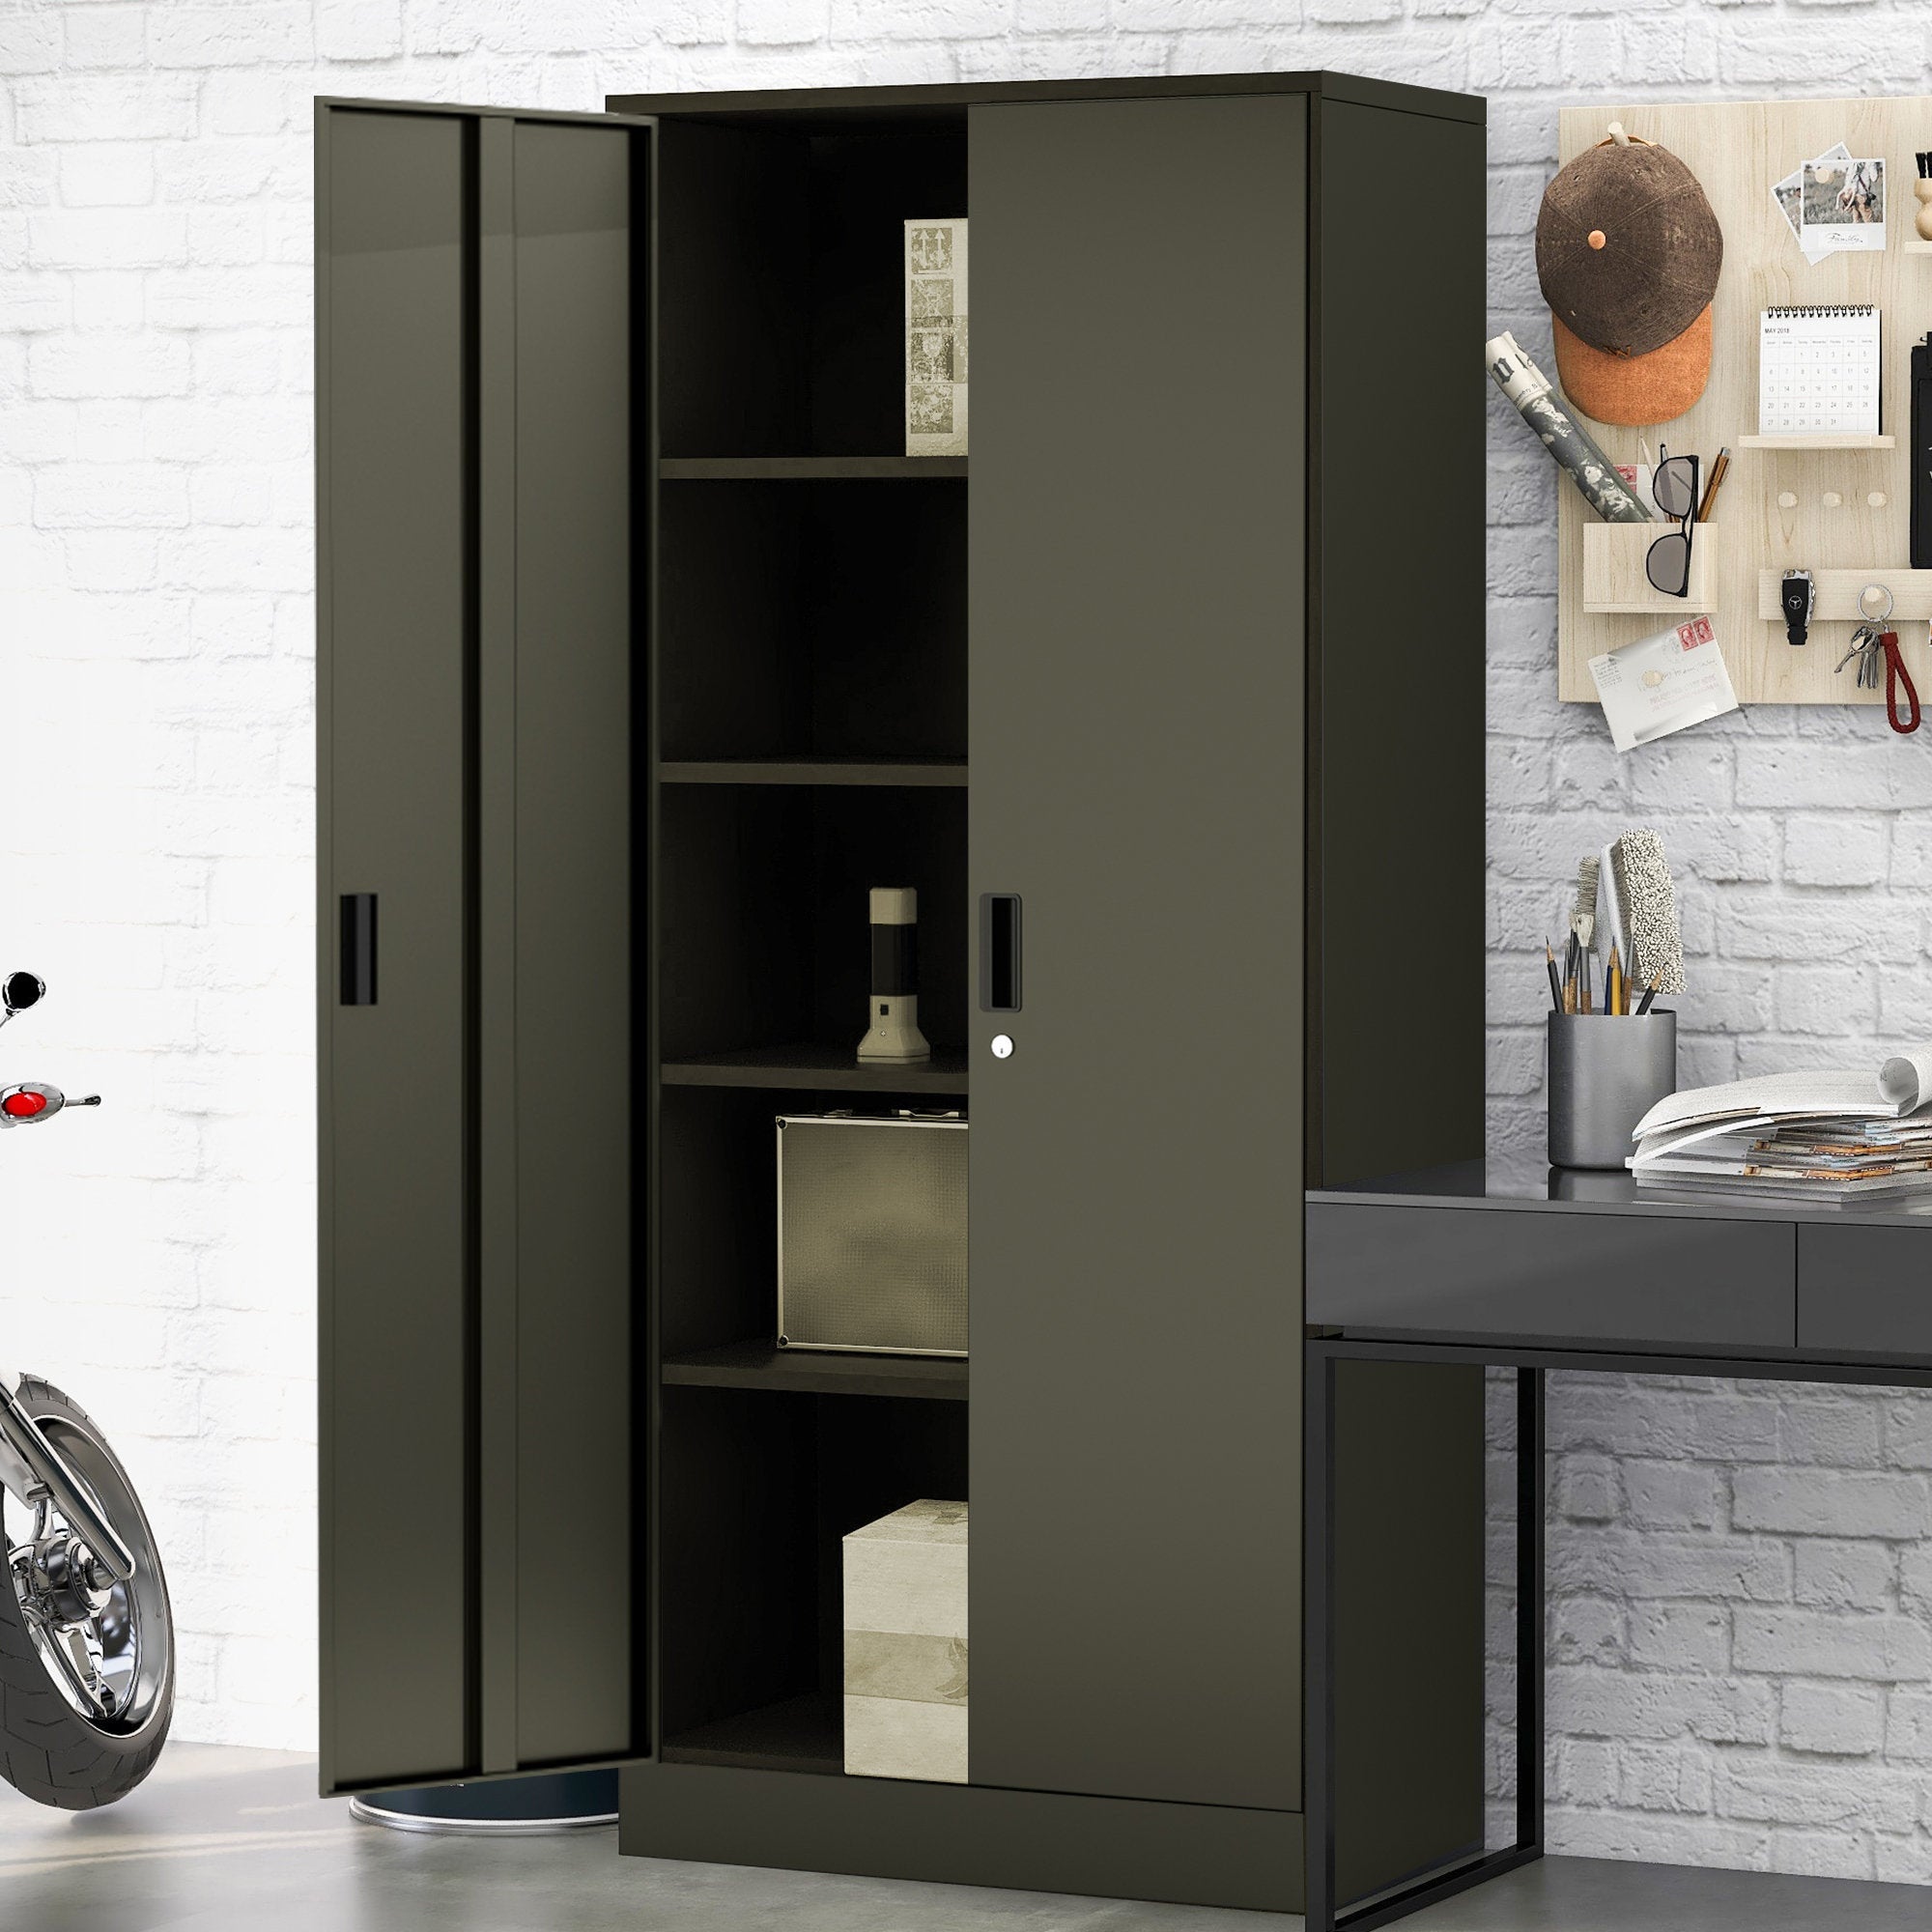 Locker Cabinet with 2 4 Doors Steel Gray Office Home Filing Organizer Storage US